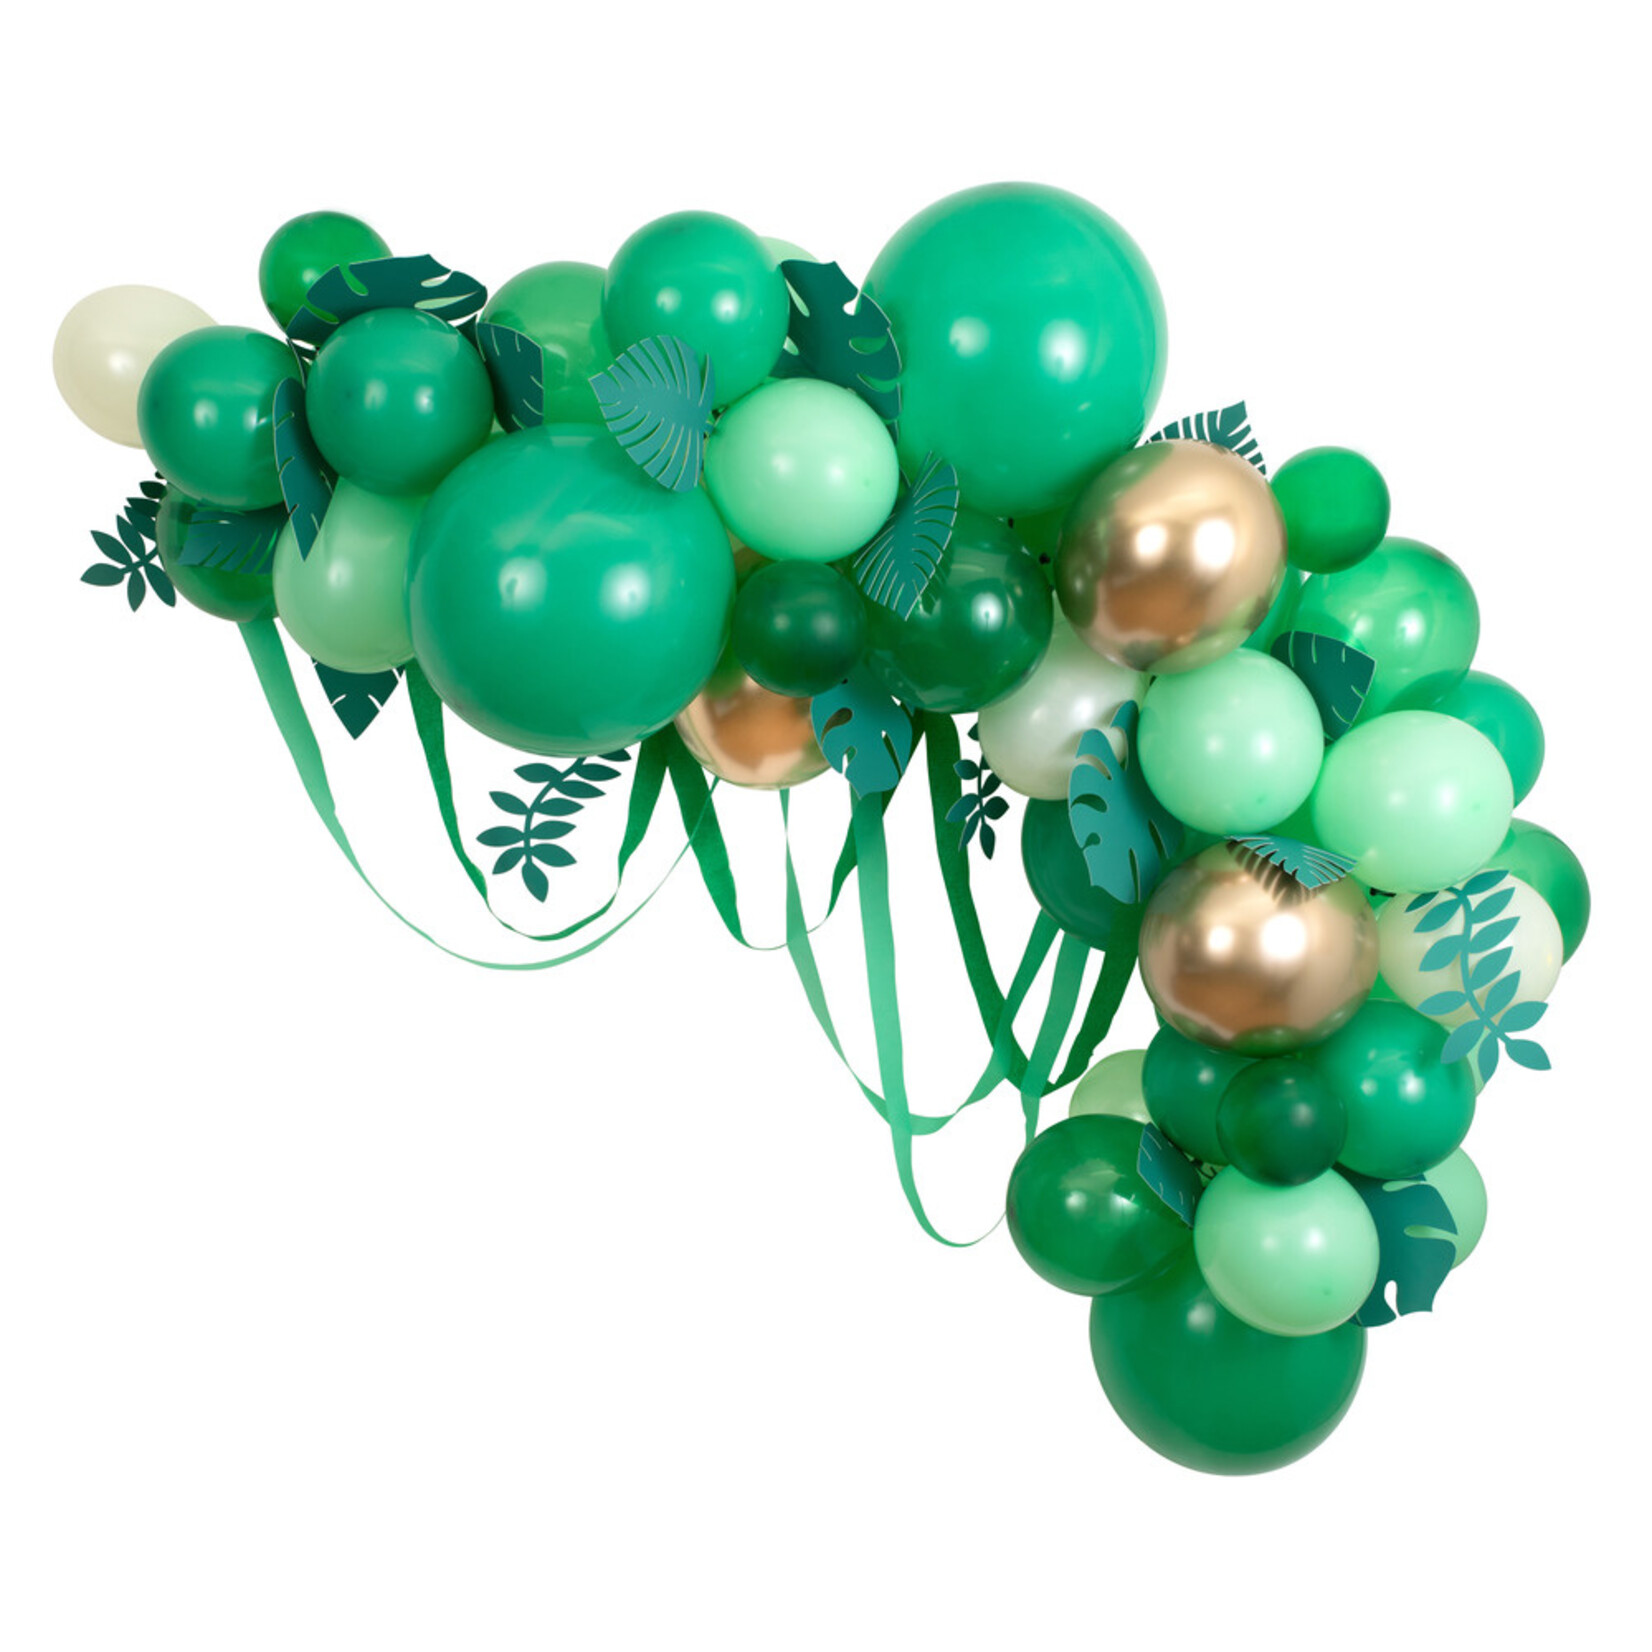 MERIMERI Leafy green balloon arch